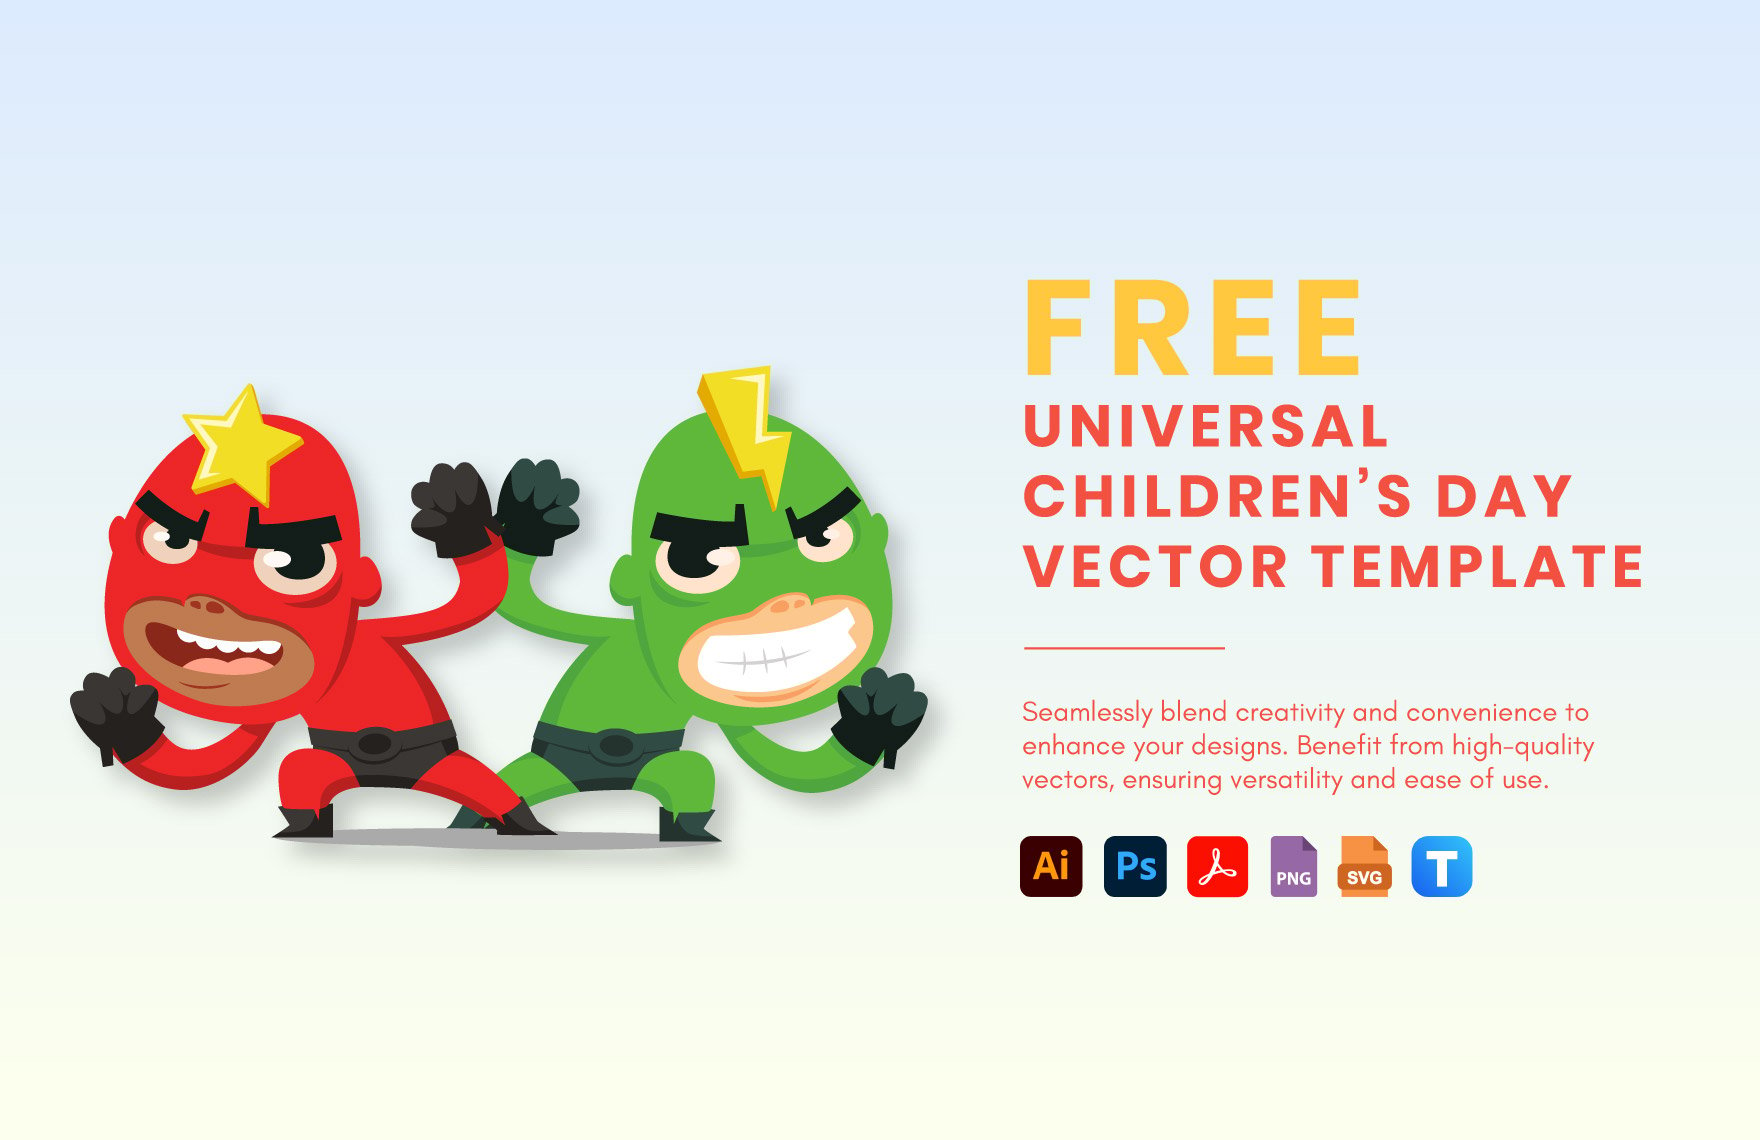 Free Universal Children’s Day Vector